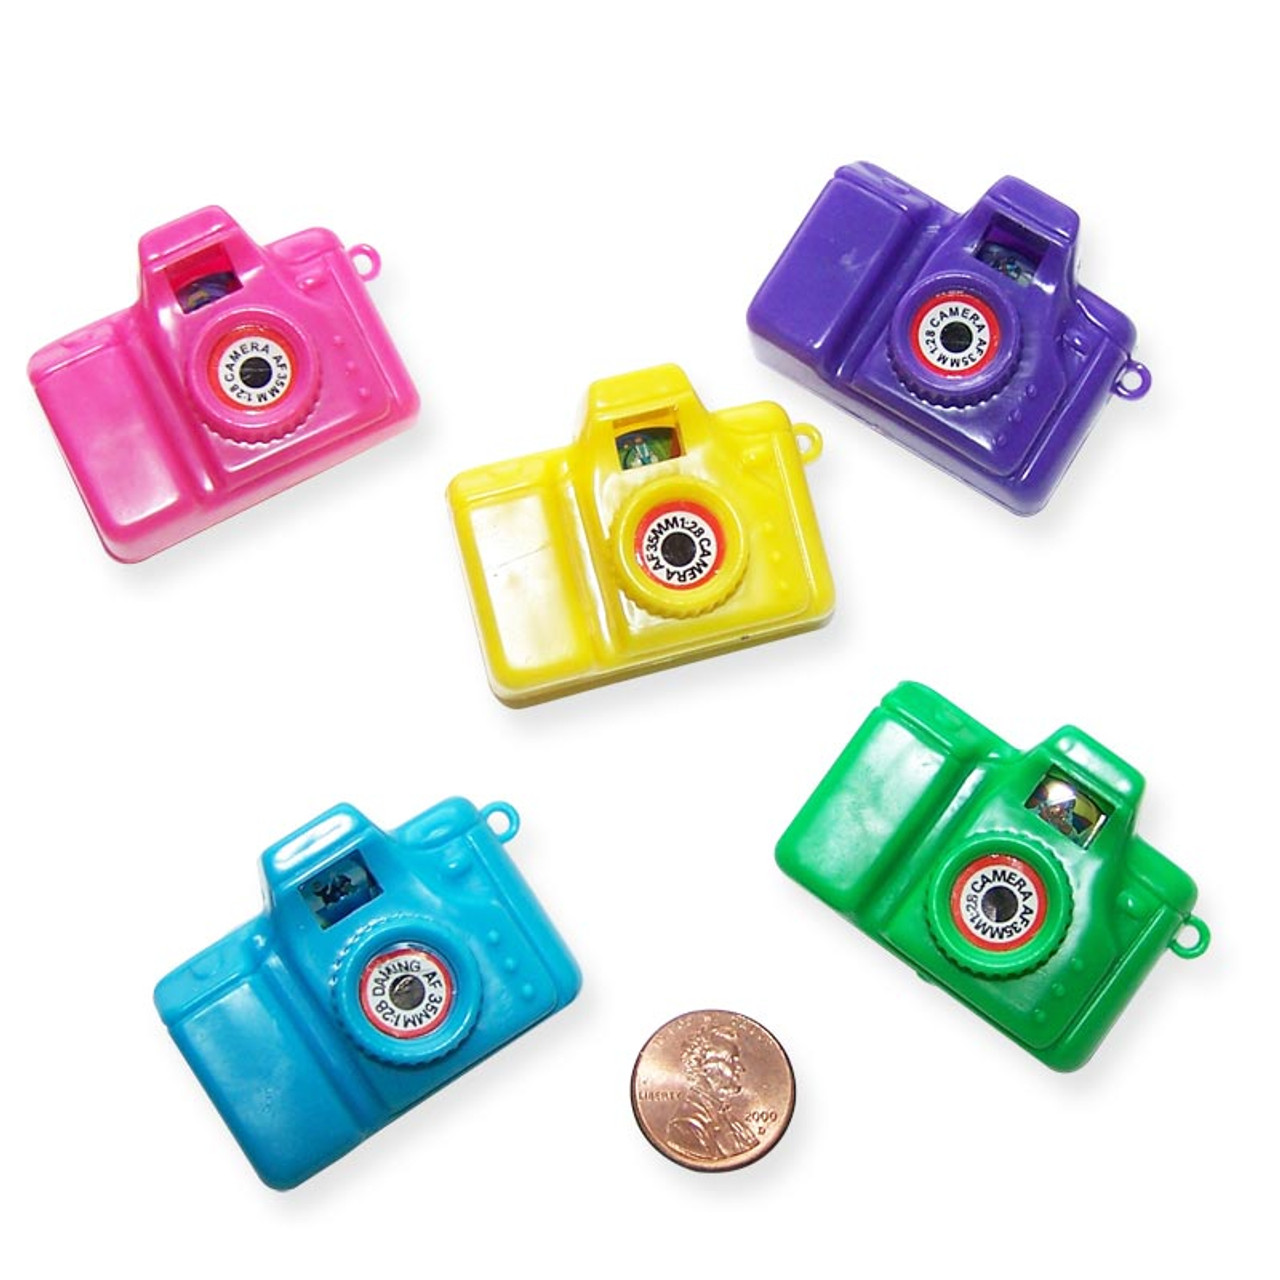 Plastic Mini Cameras - Fun Novelty Toy